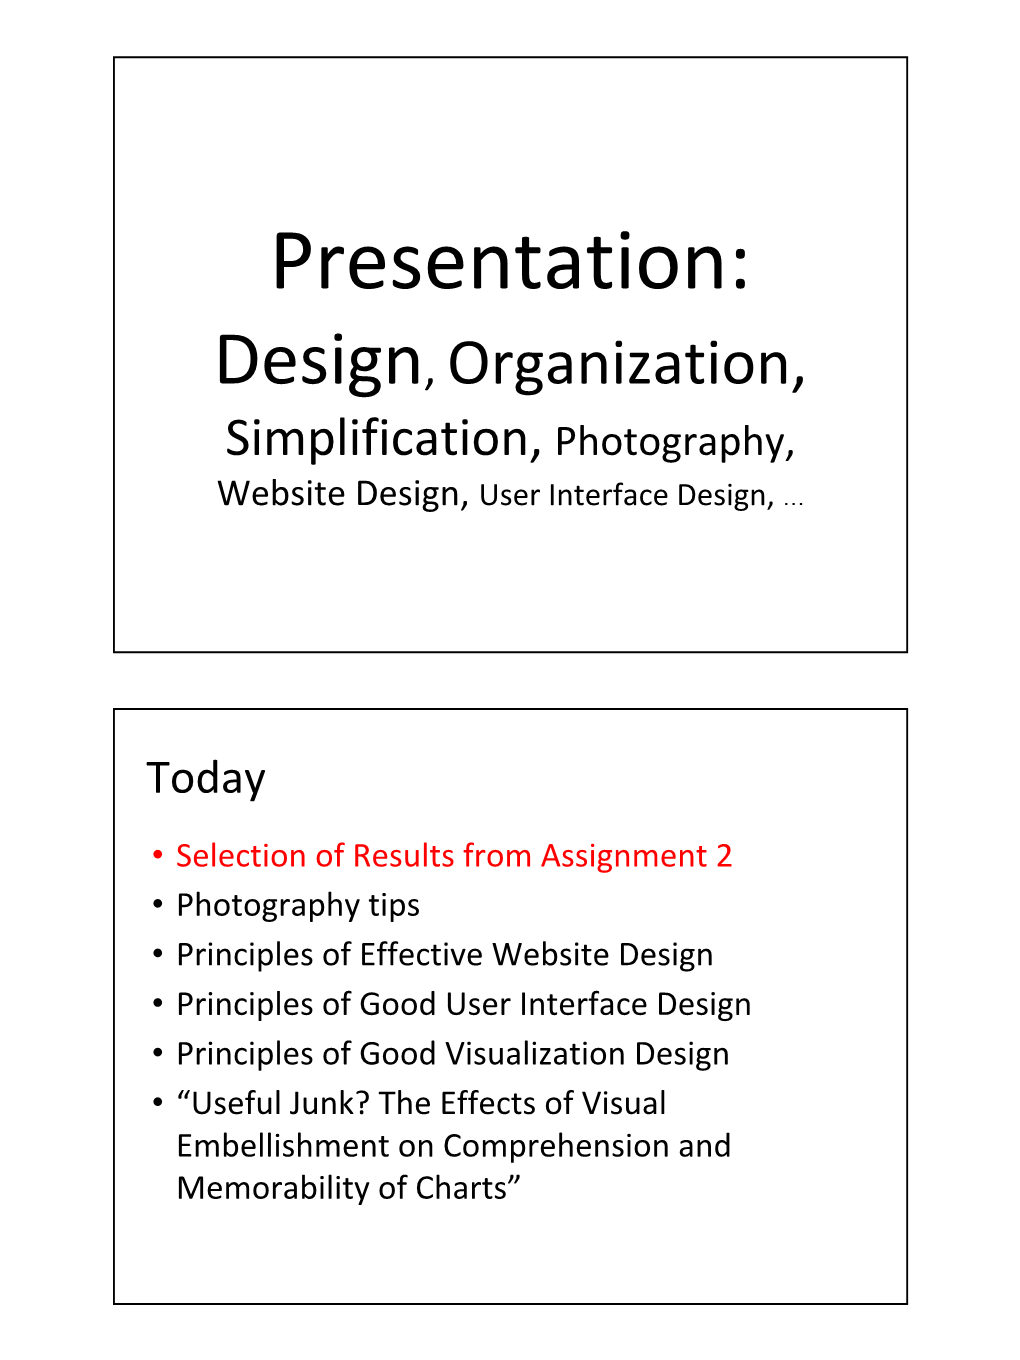 Design & Presentation & Chart Junk